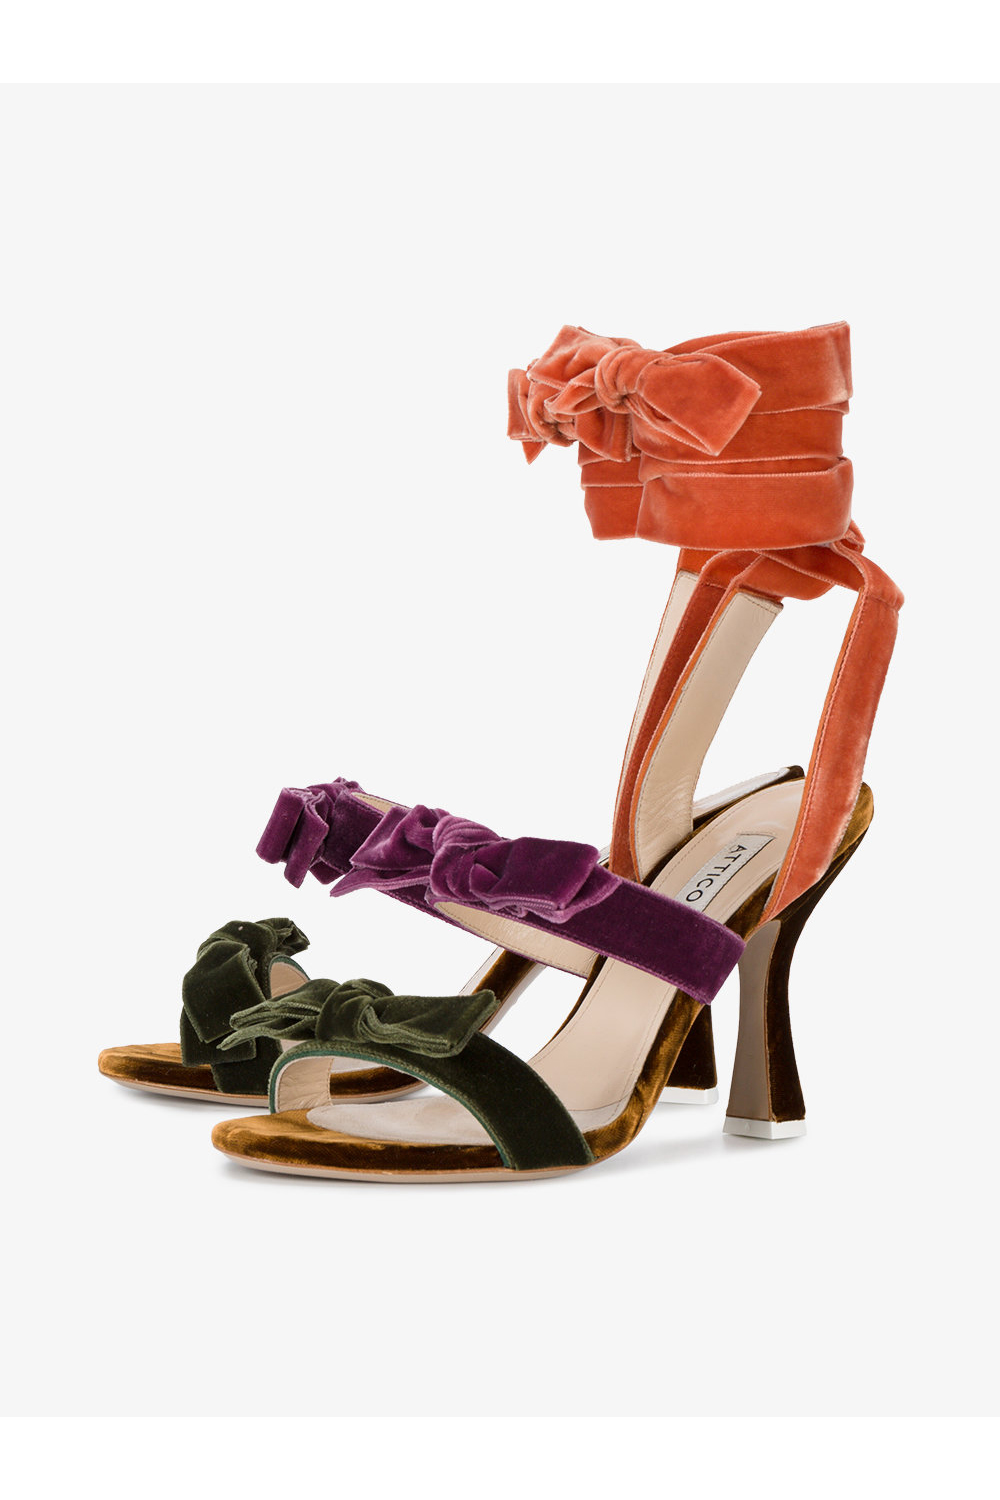 Attico heels, $930 USD from Browns